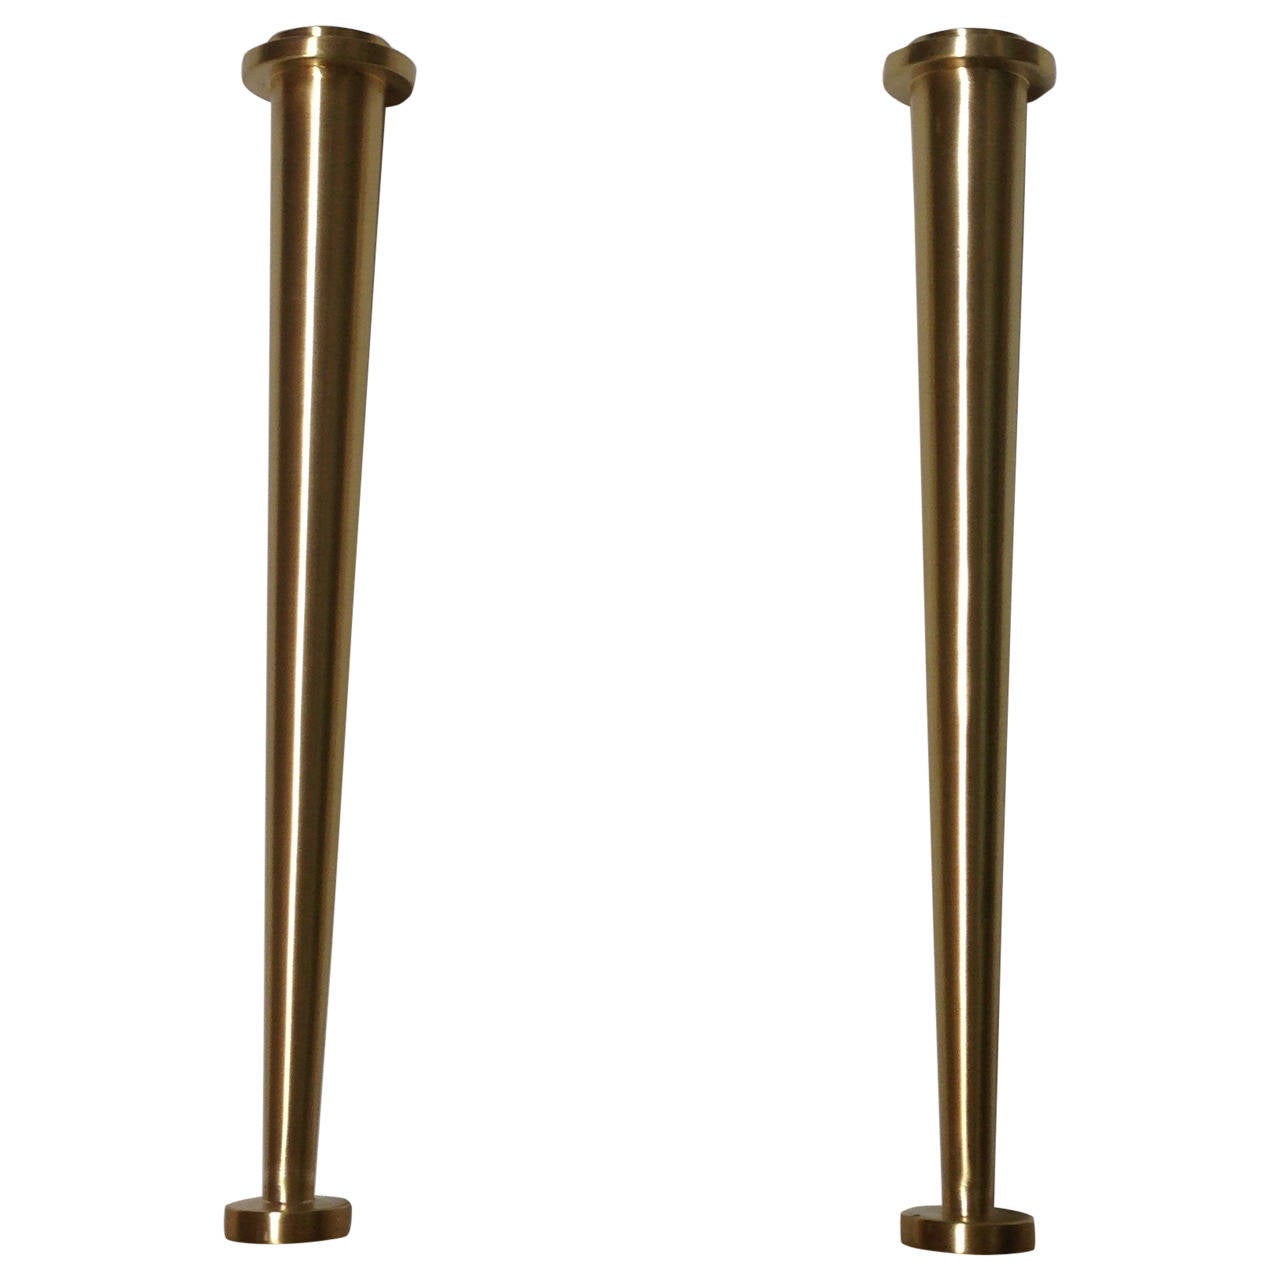 Pair of medium size satin brass candleholders.